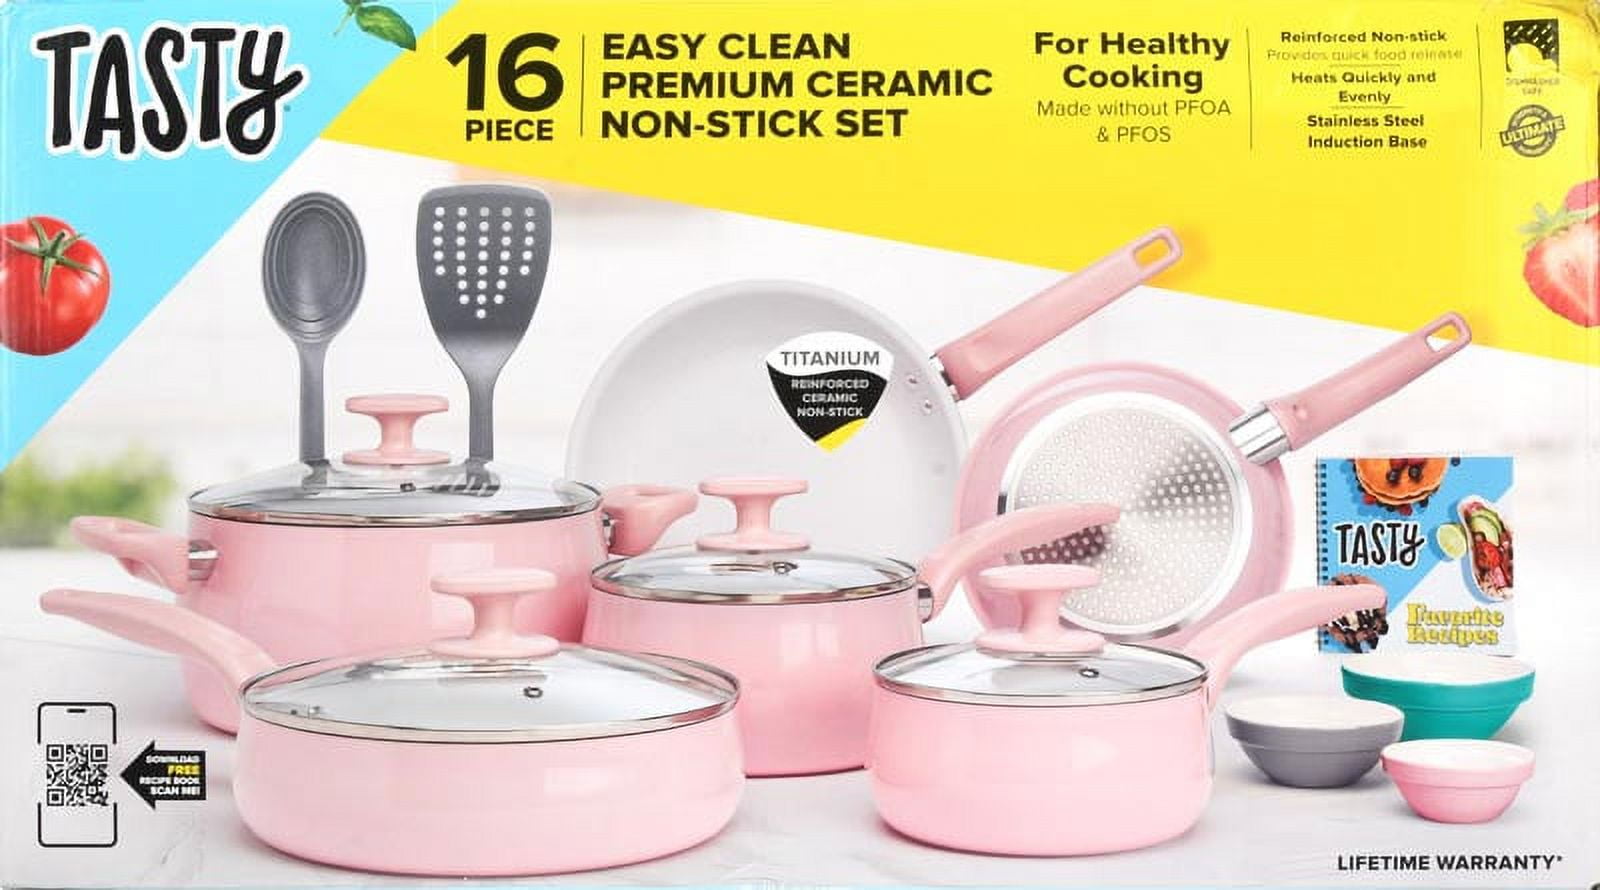 Greater Goods Savvy Ceramic Nonstick Cookware Set, 10 Piece Kit (Pink)